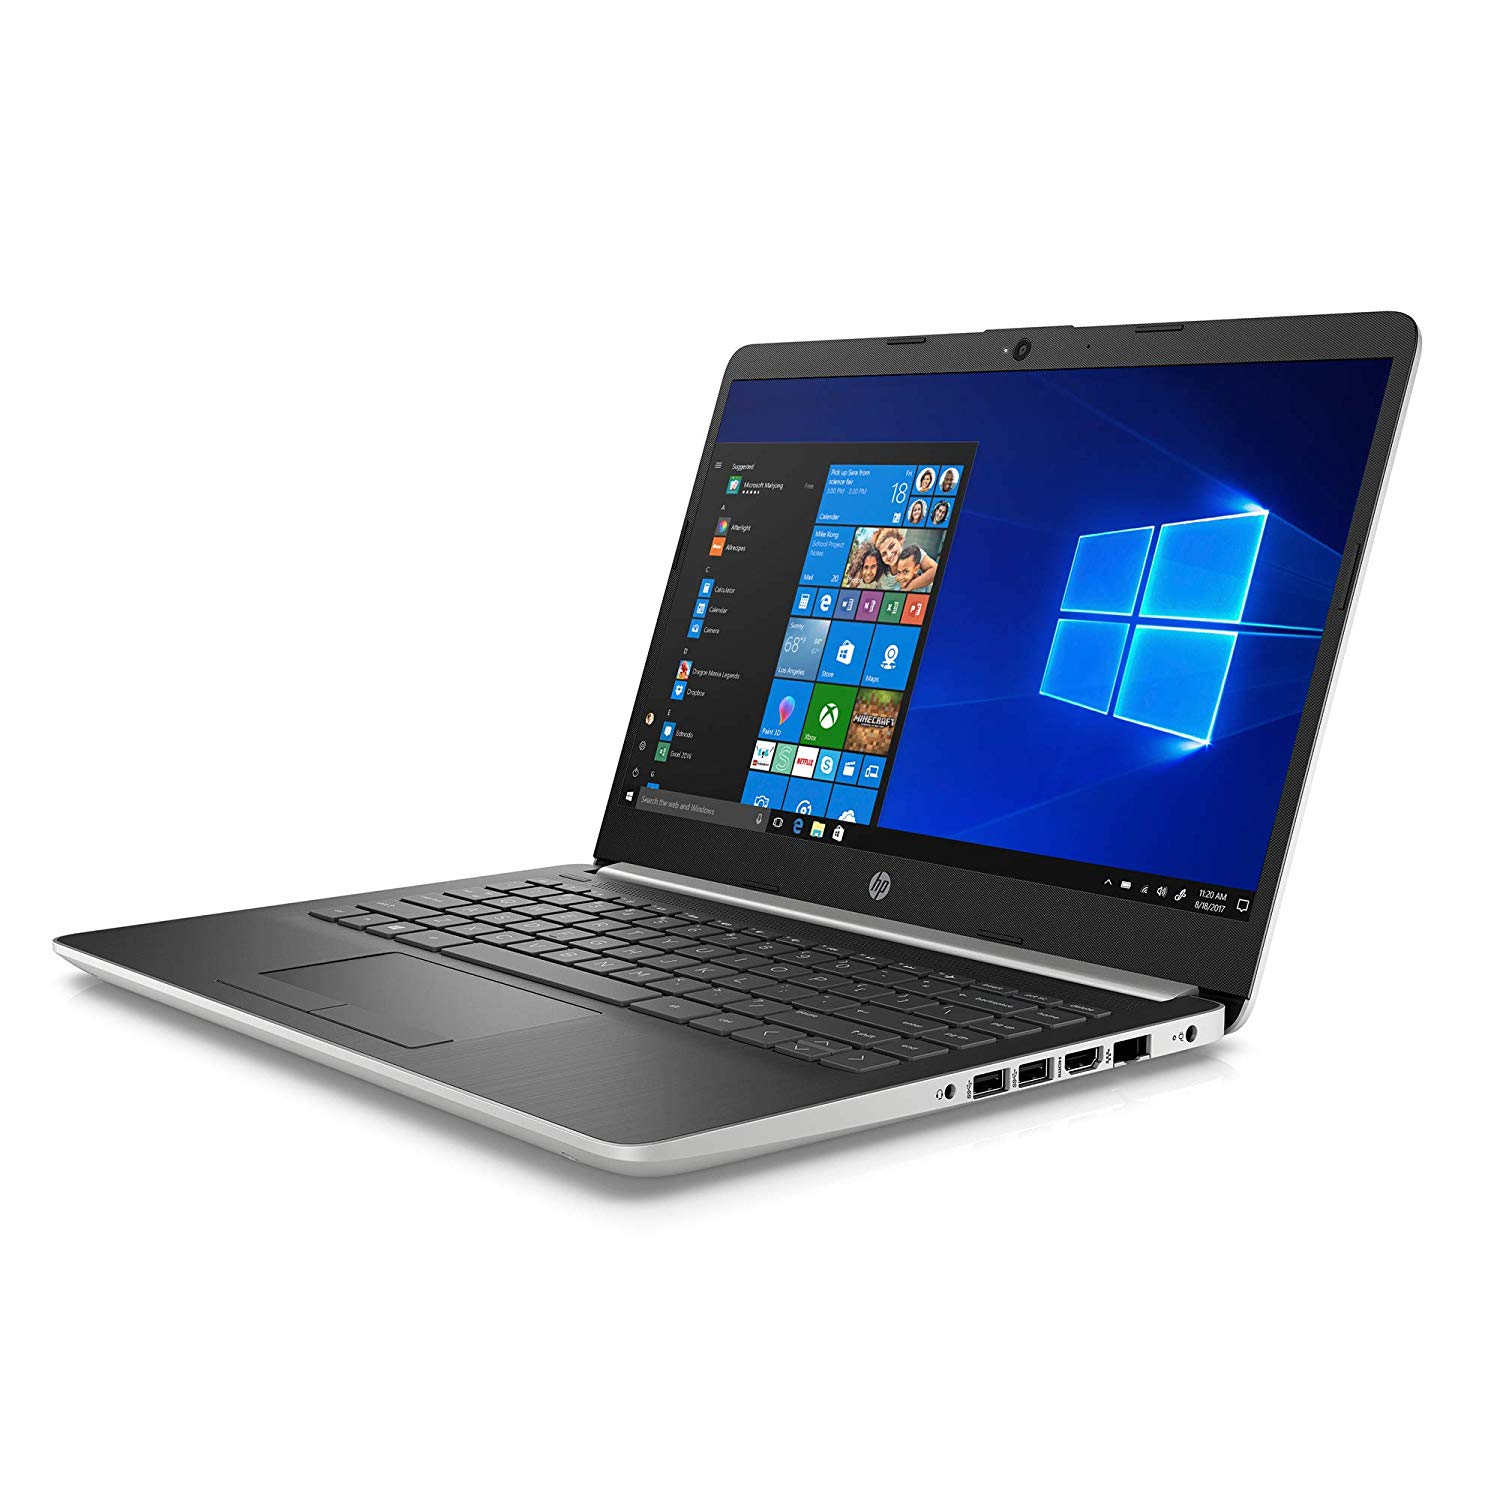 HP PAVILION 14 DQ100 - Core i5 - HP laptops under 125000 - Daraz Life
